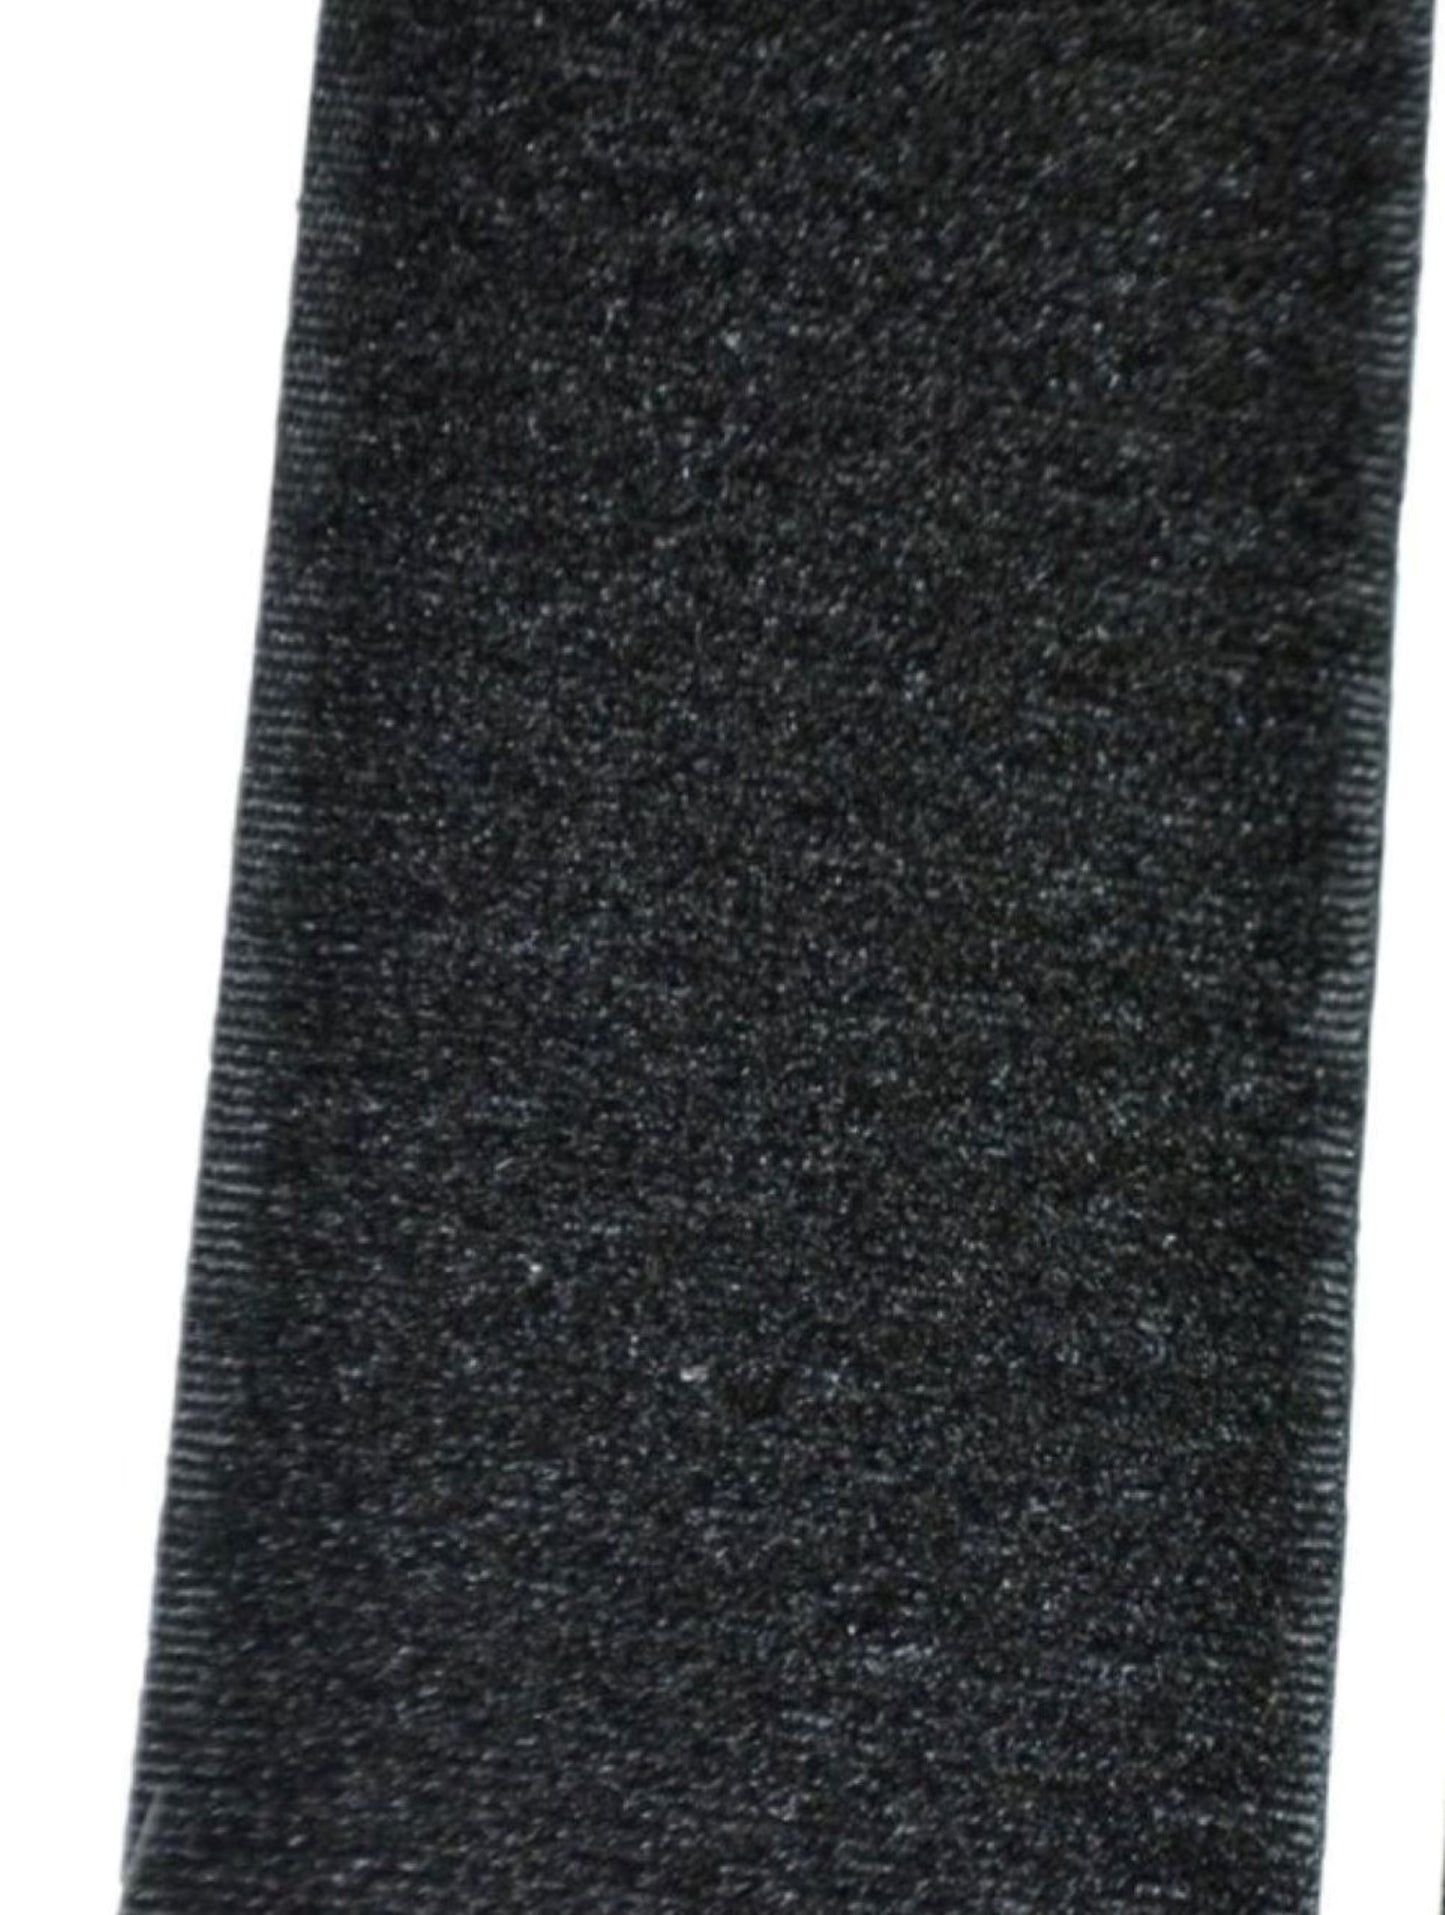 VELCRO® Brand - 2 Black Loop Sew-On